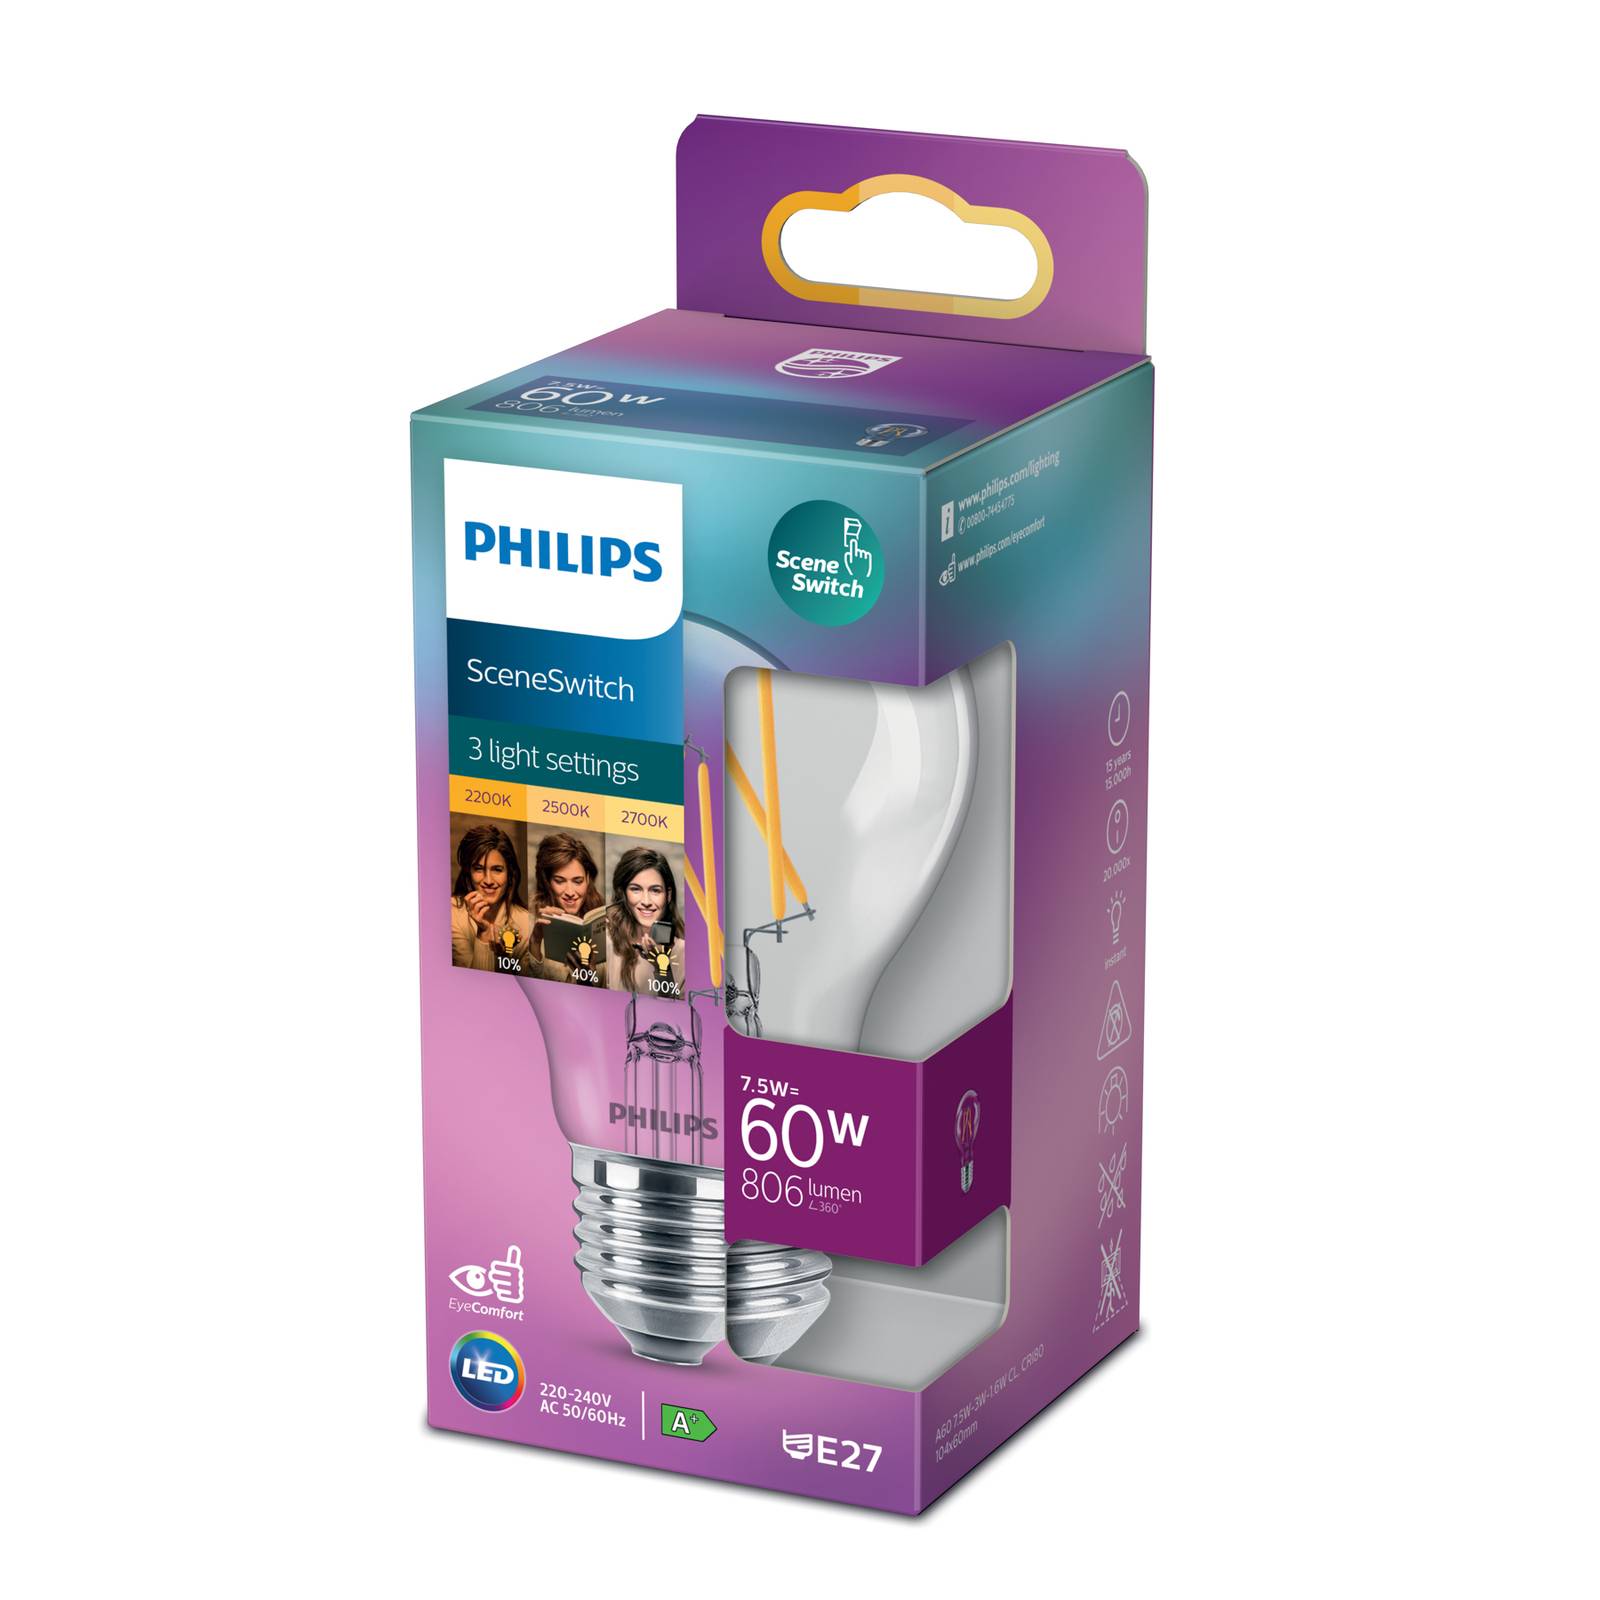 Philips SceneSwitch E27 LED-lampe med glødetråd 7,5 W